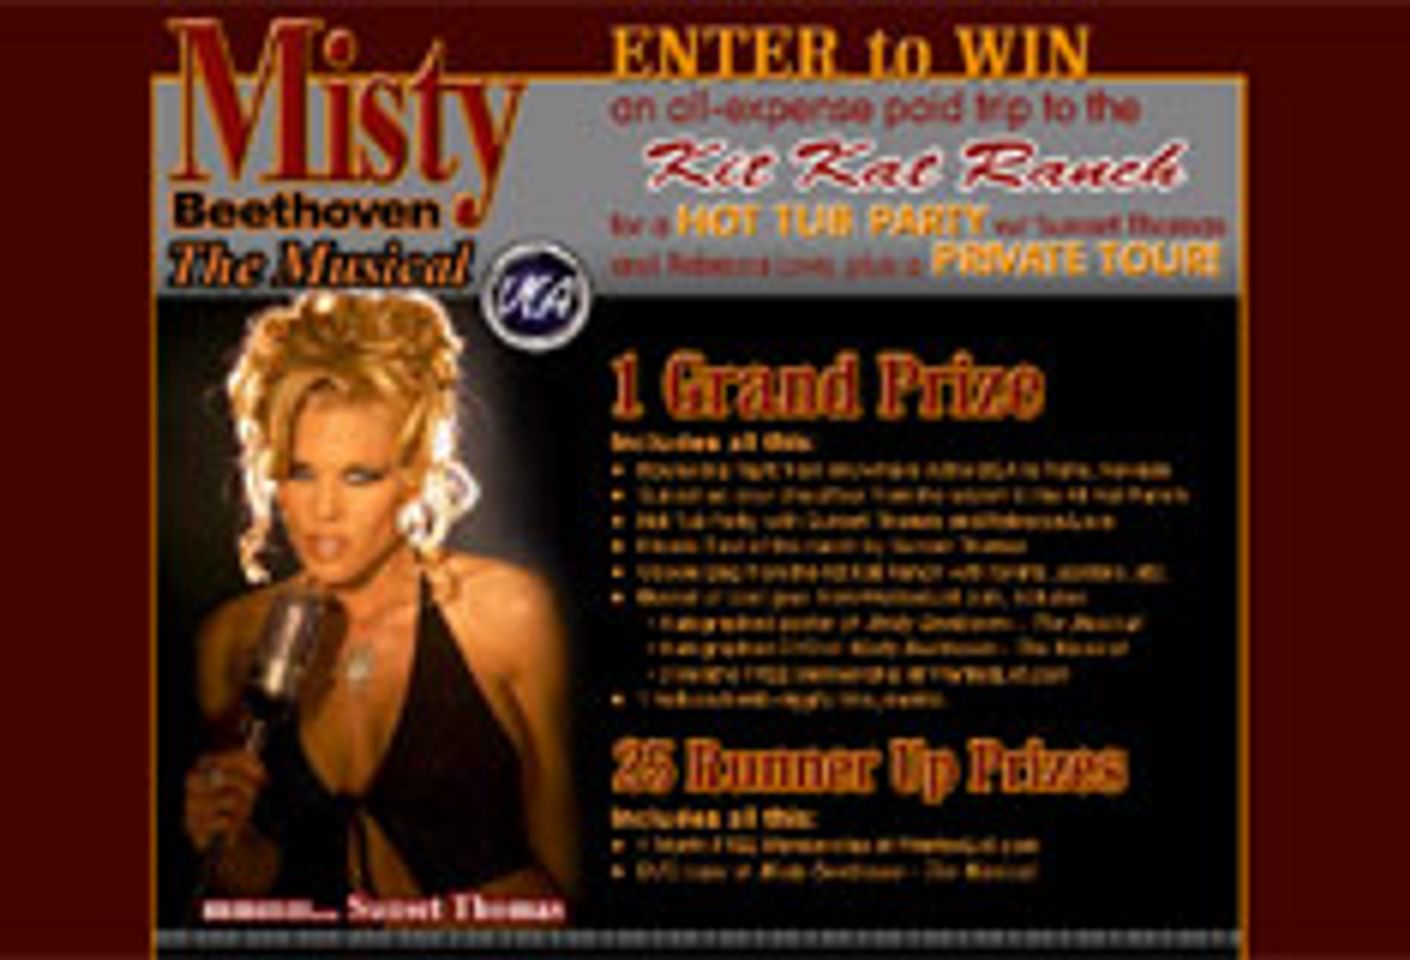 WantedList.com, VCA Partner for Misty Beethoven Contest